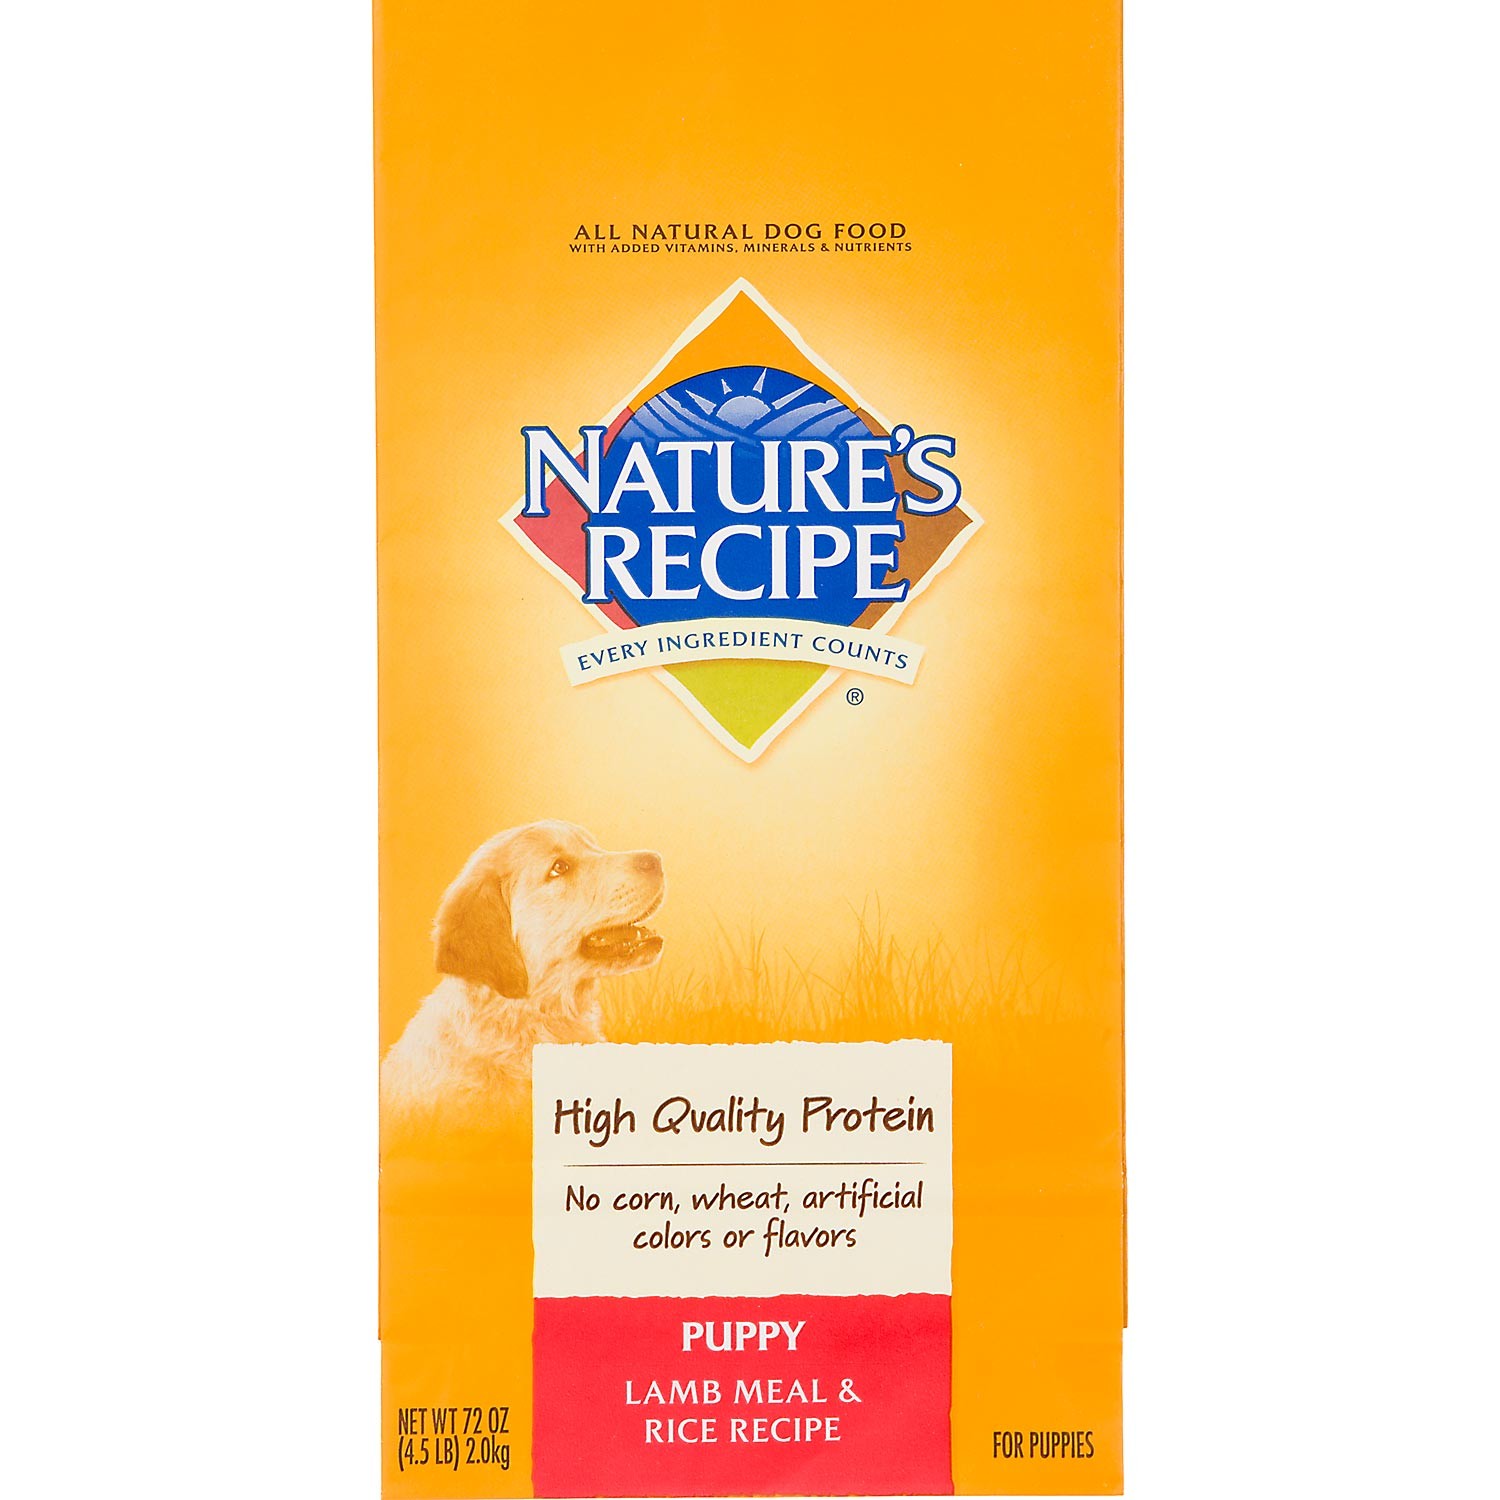 Nature's Recipe Puppy Lamb Meal & Rice Recipe